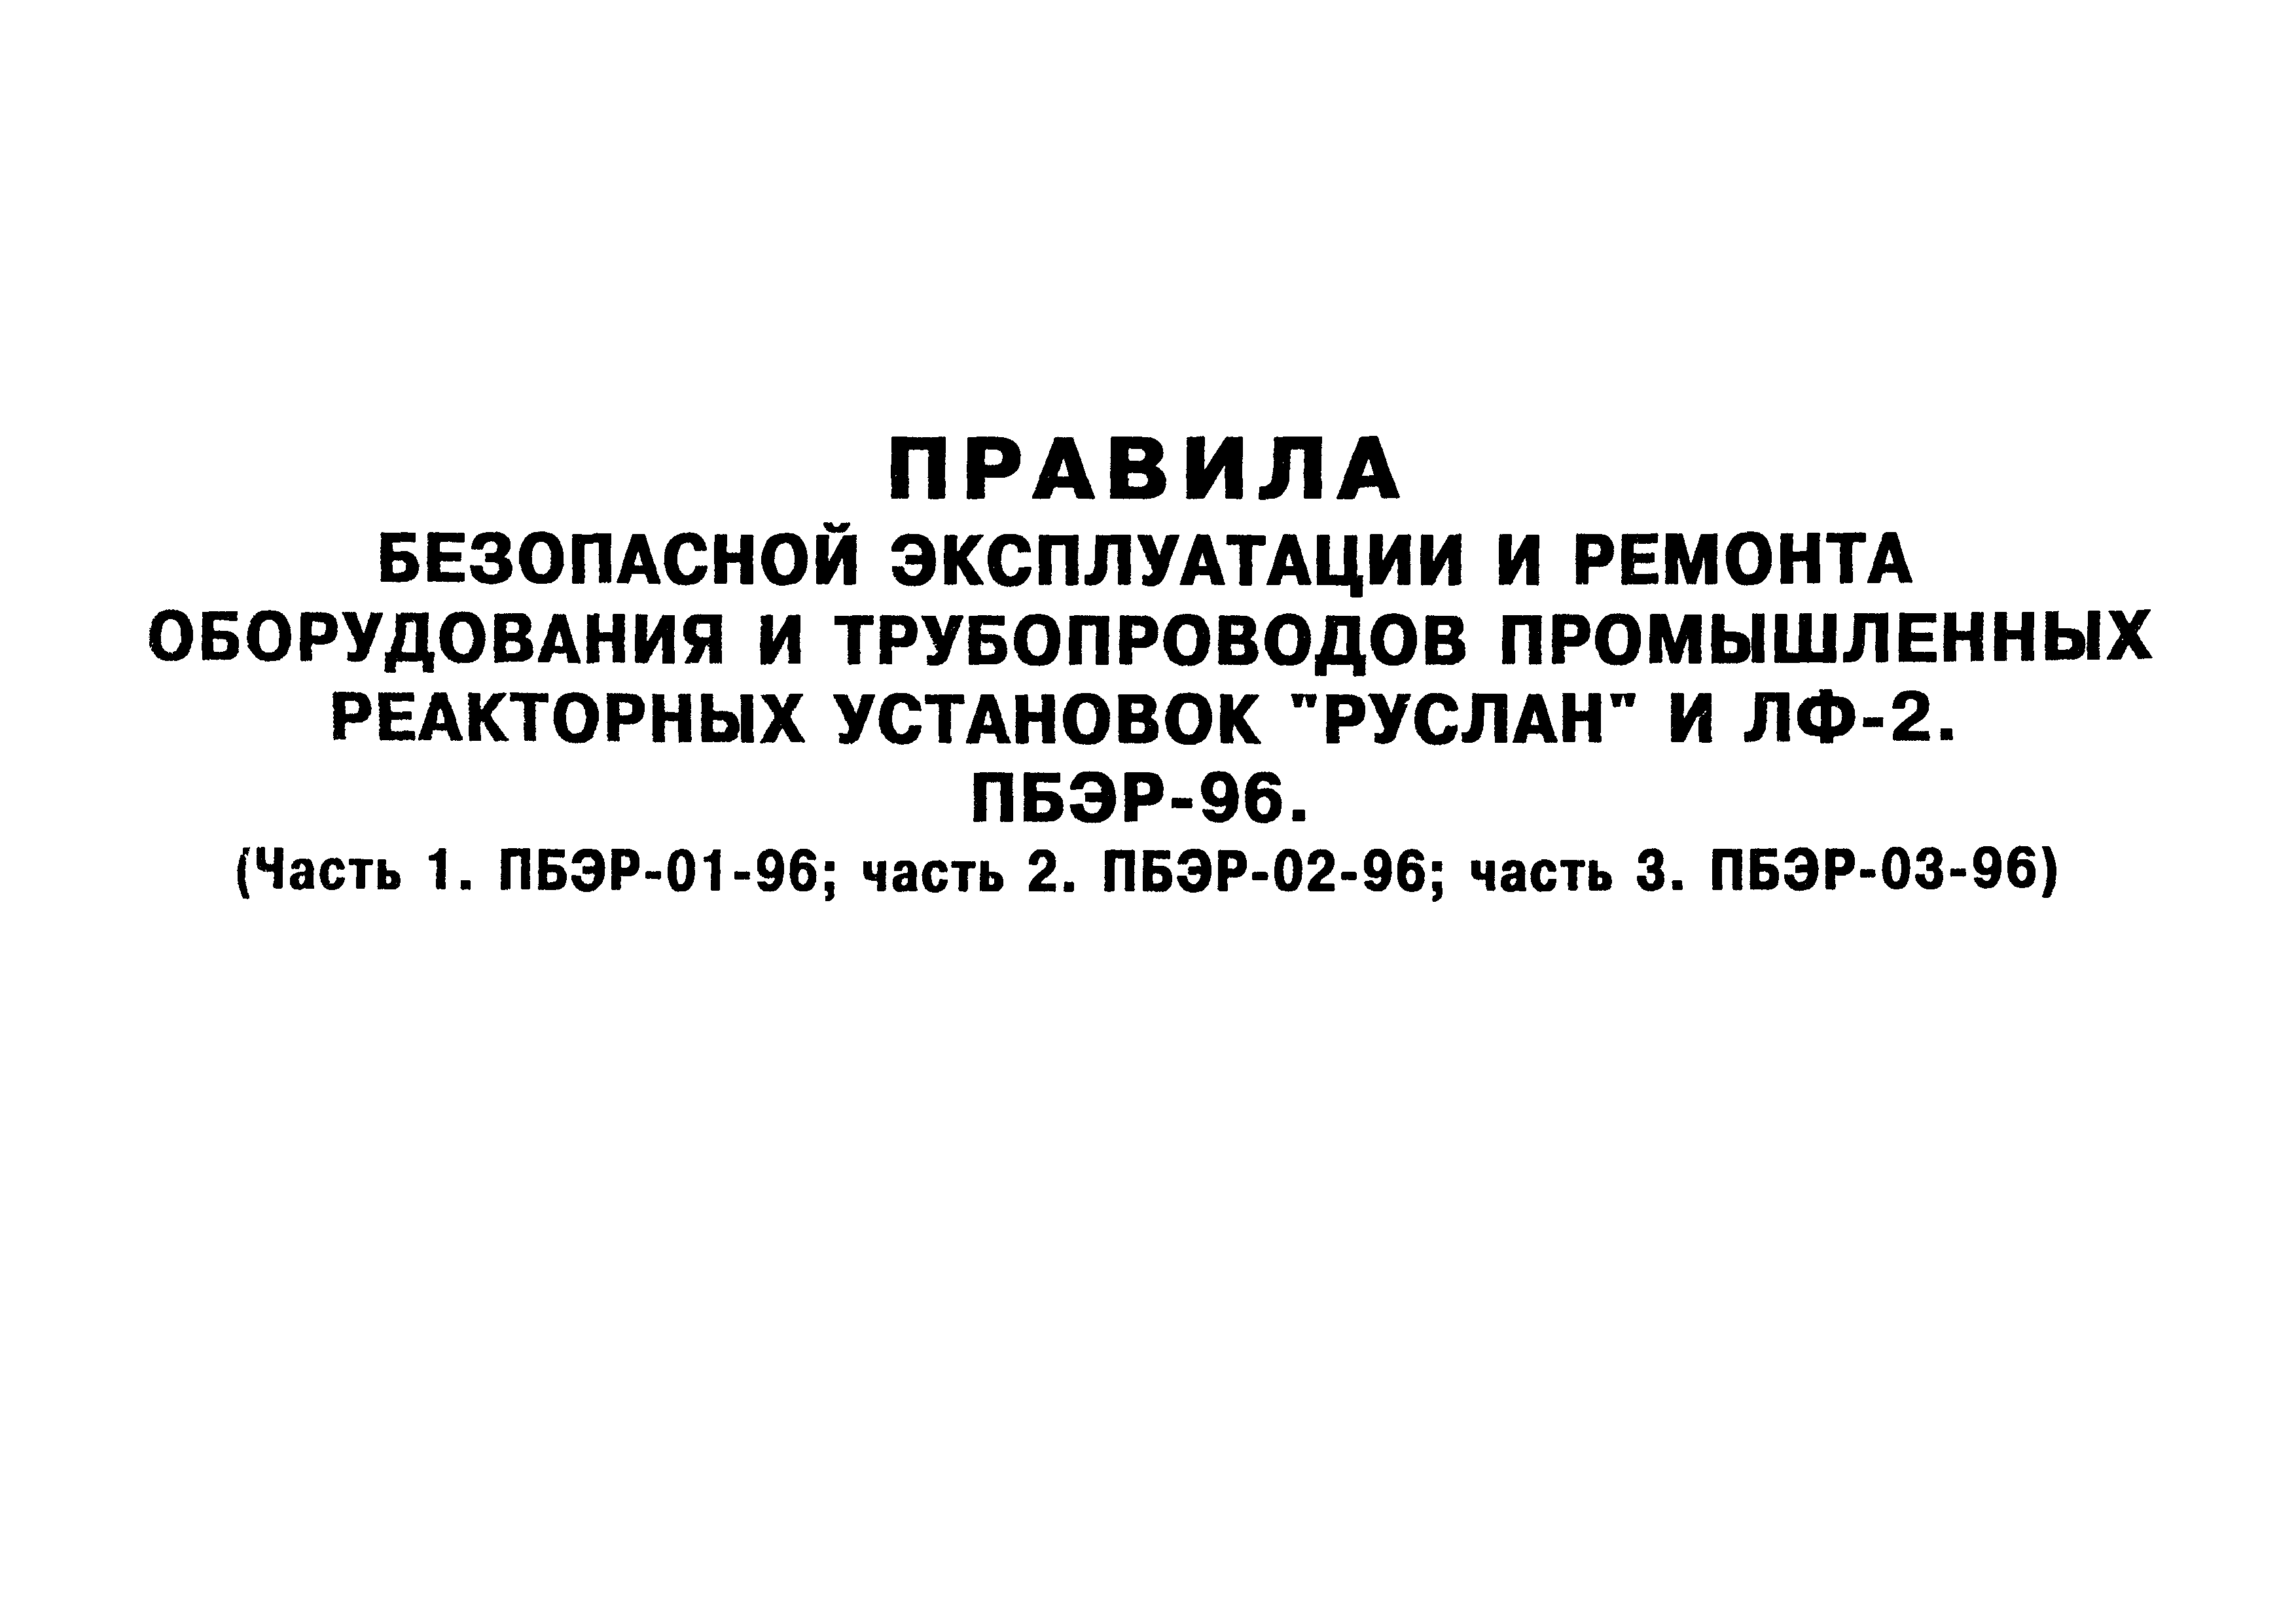 ПБЭР-01-96